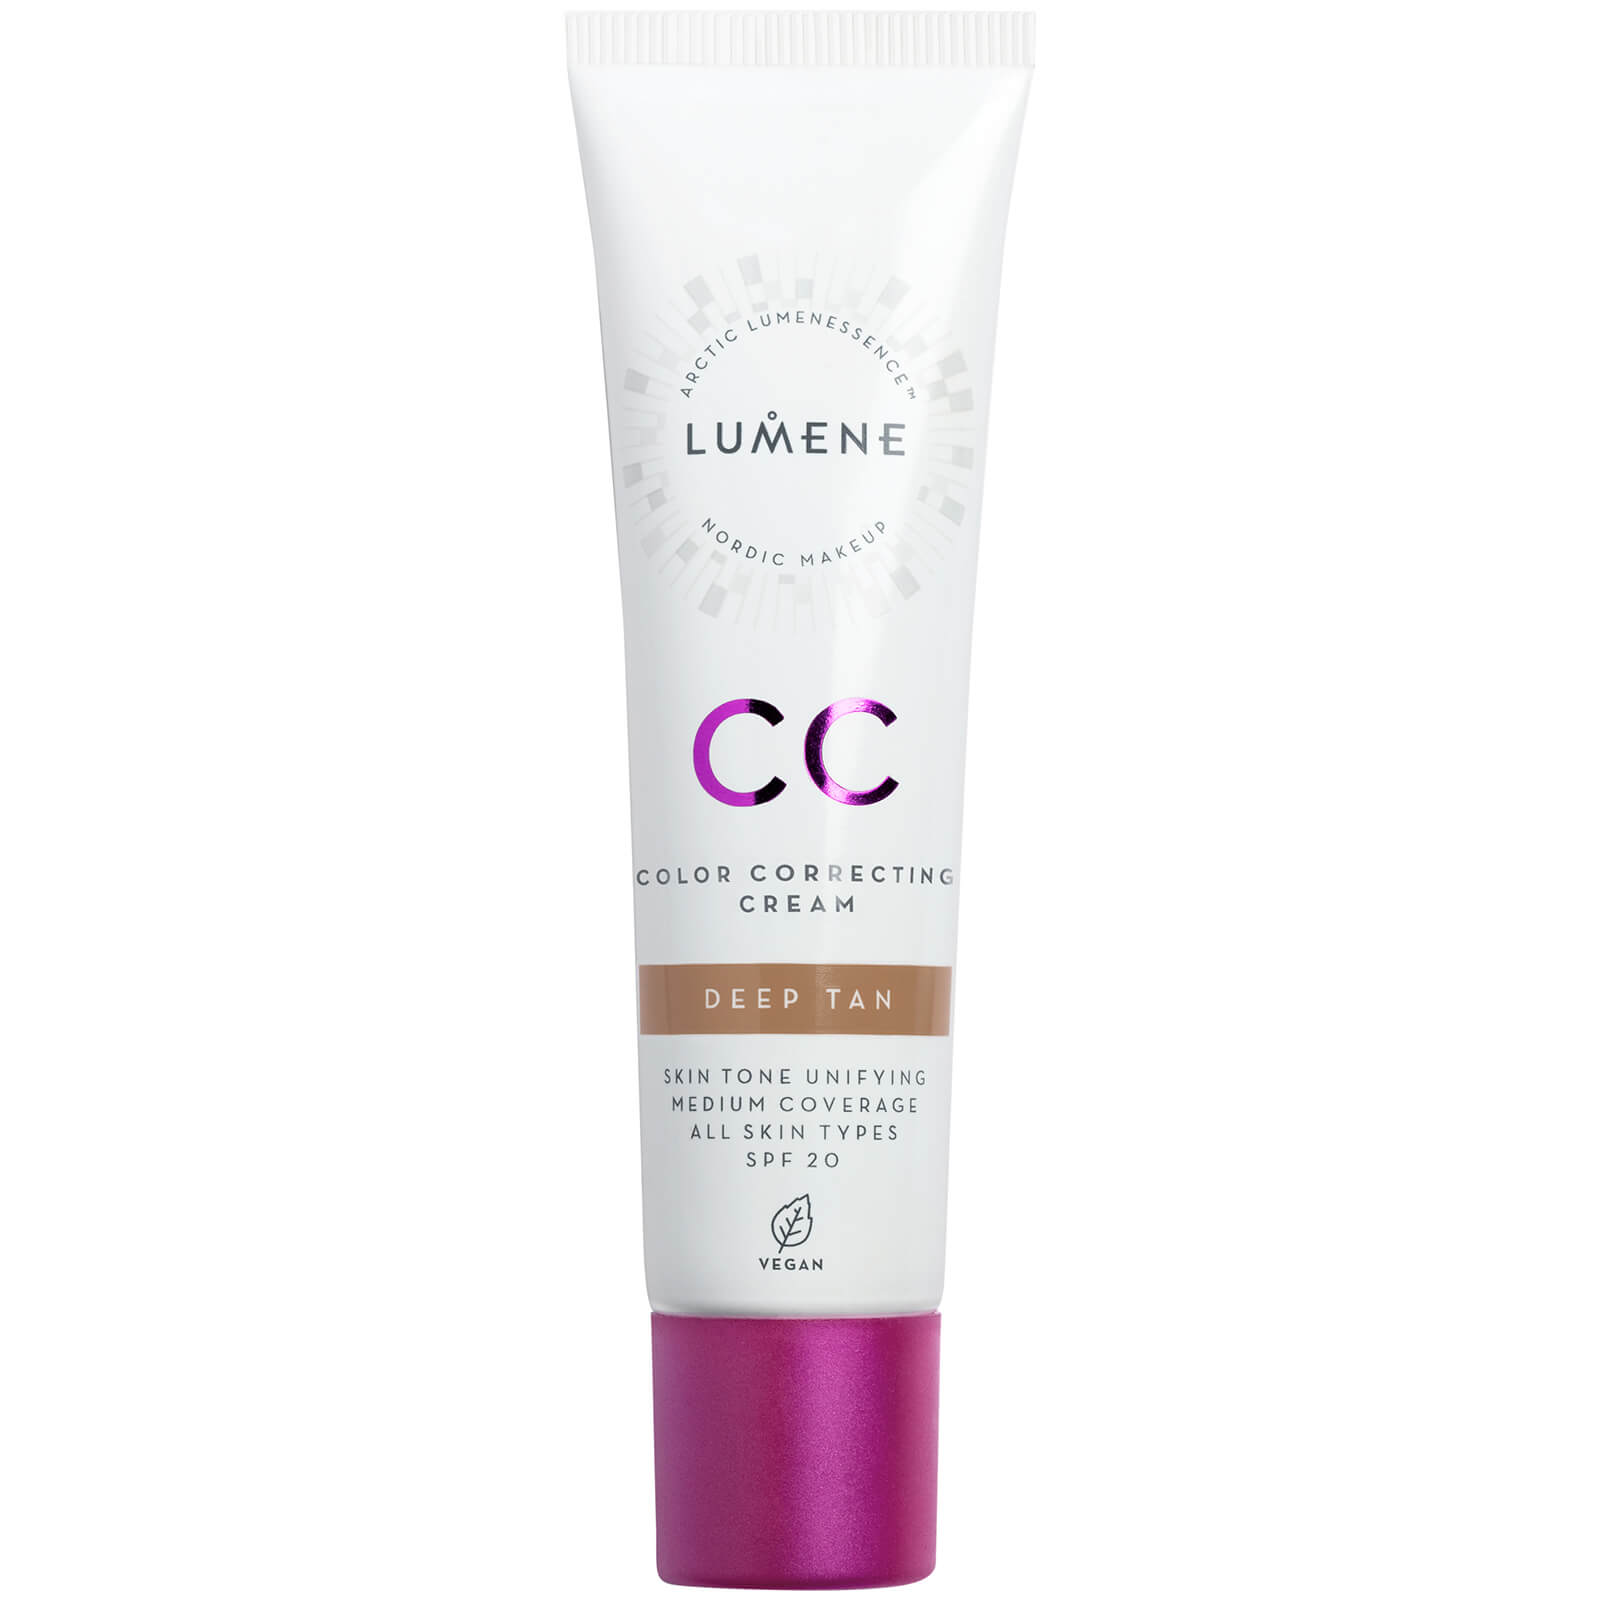 Lumene Cc Colour Correcting Cream Spf20 30ml (various Shades) - Deep Tan